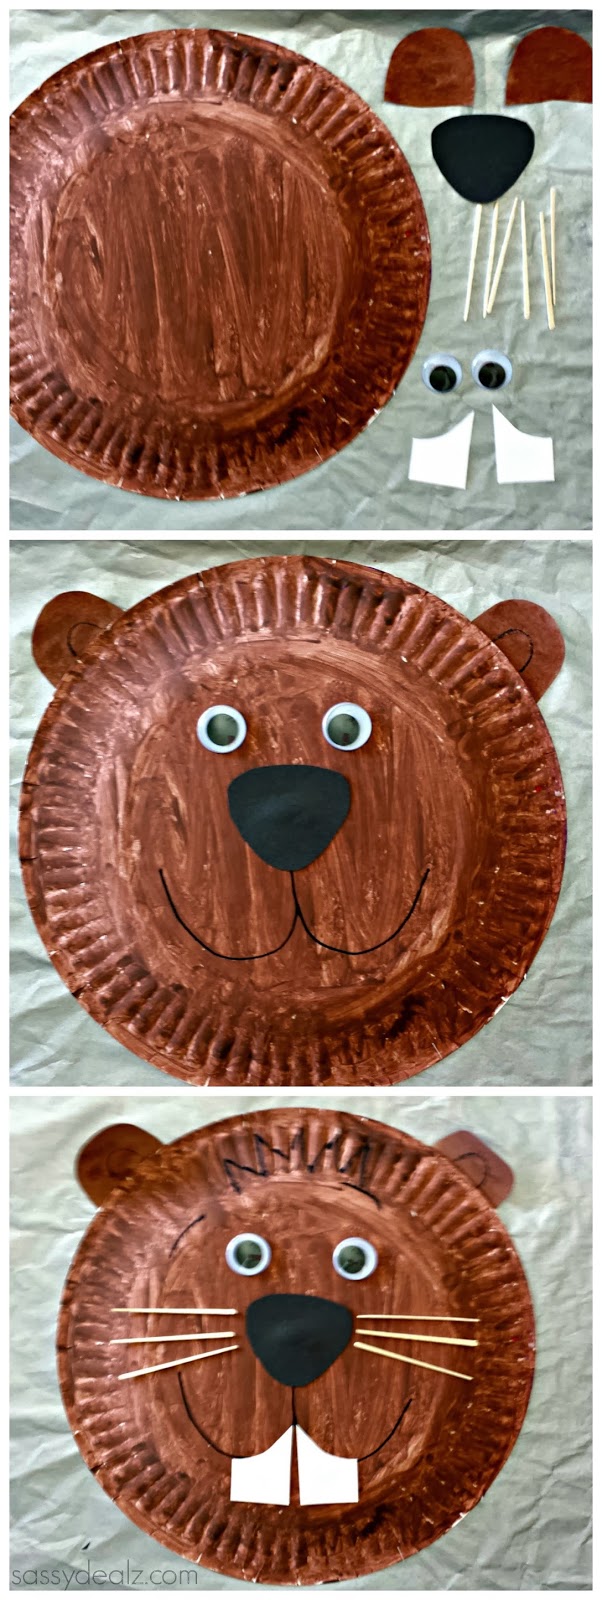 groundhog day craft for kids